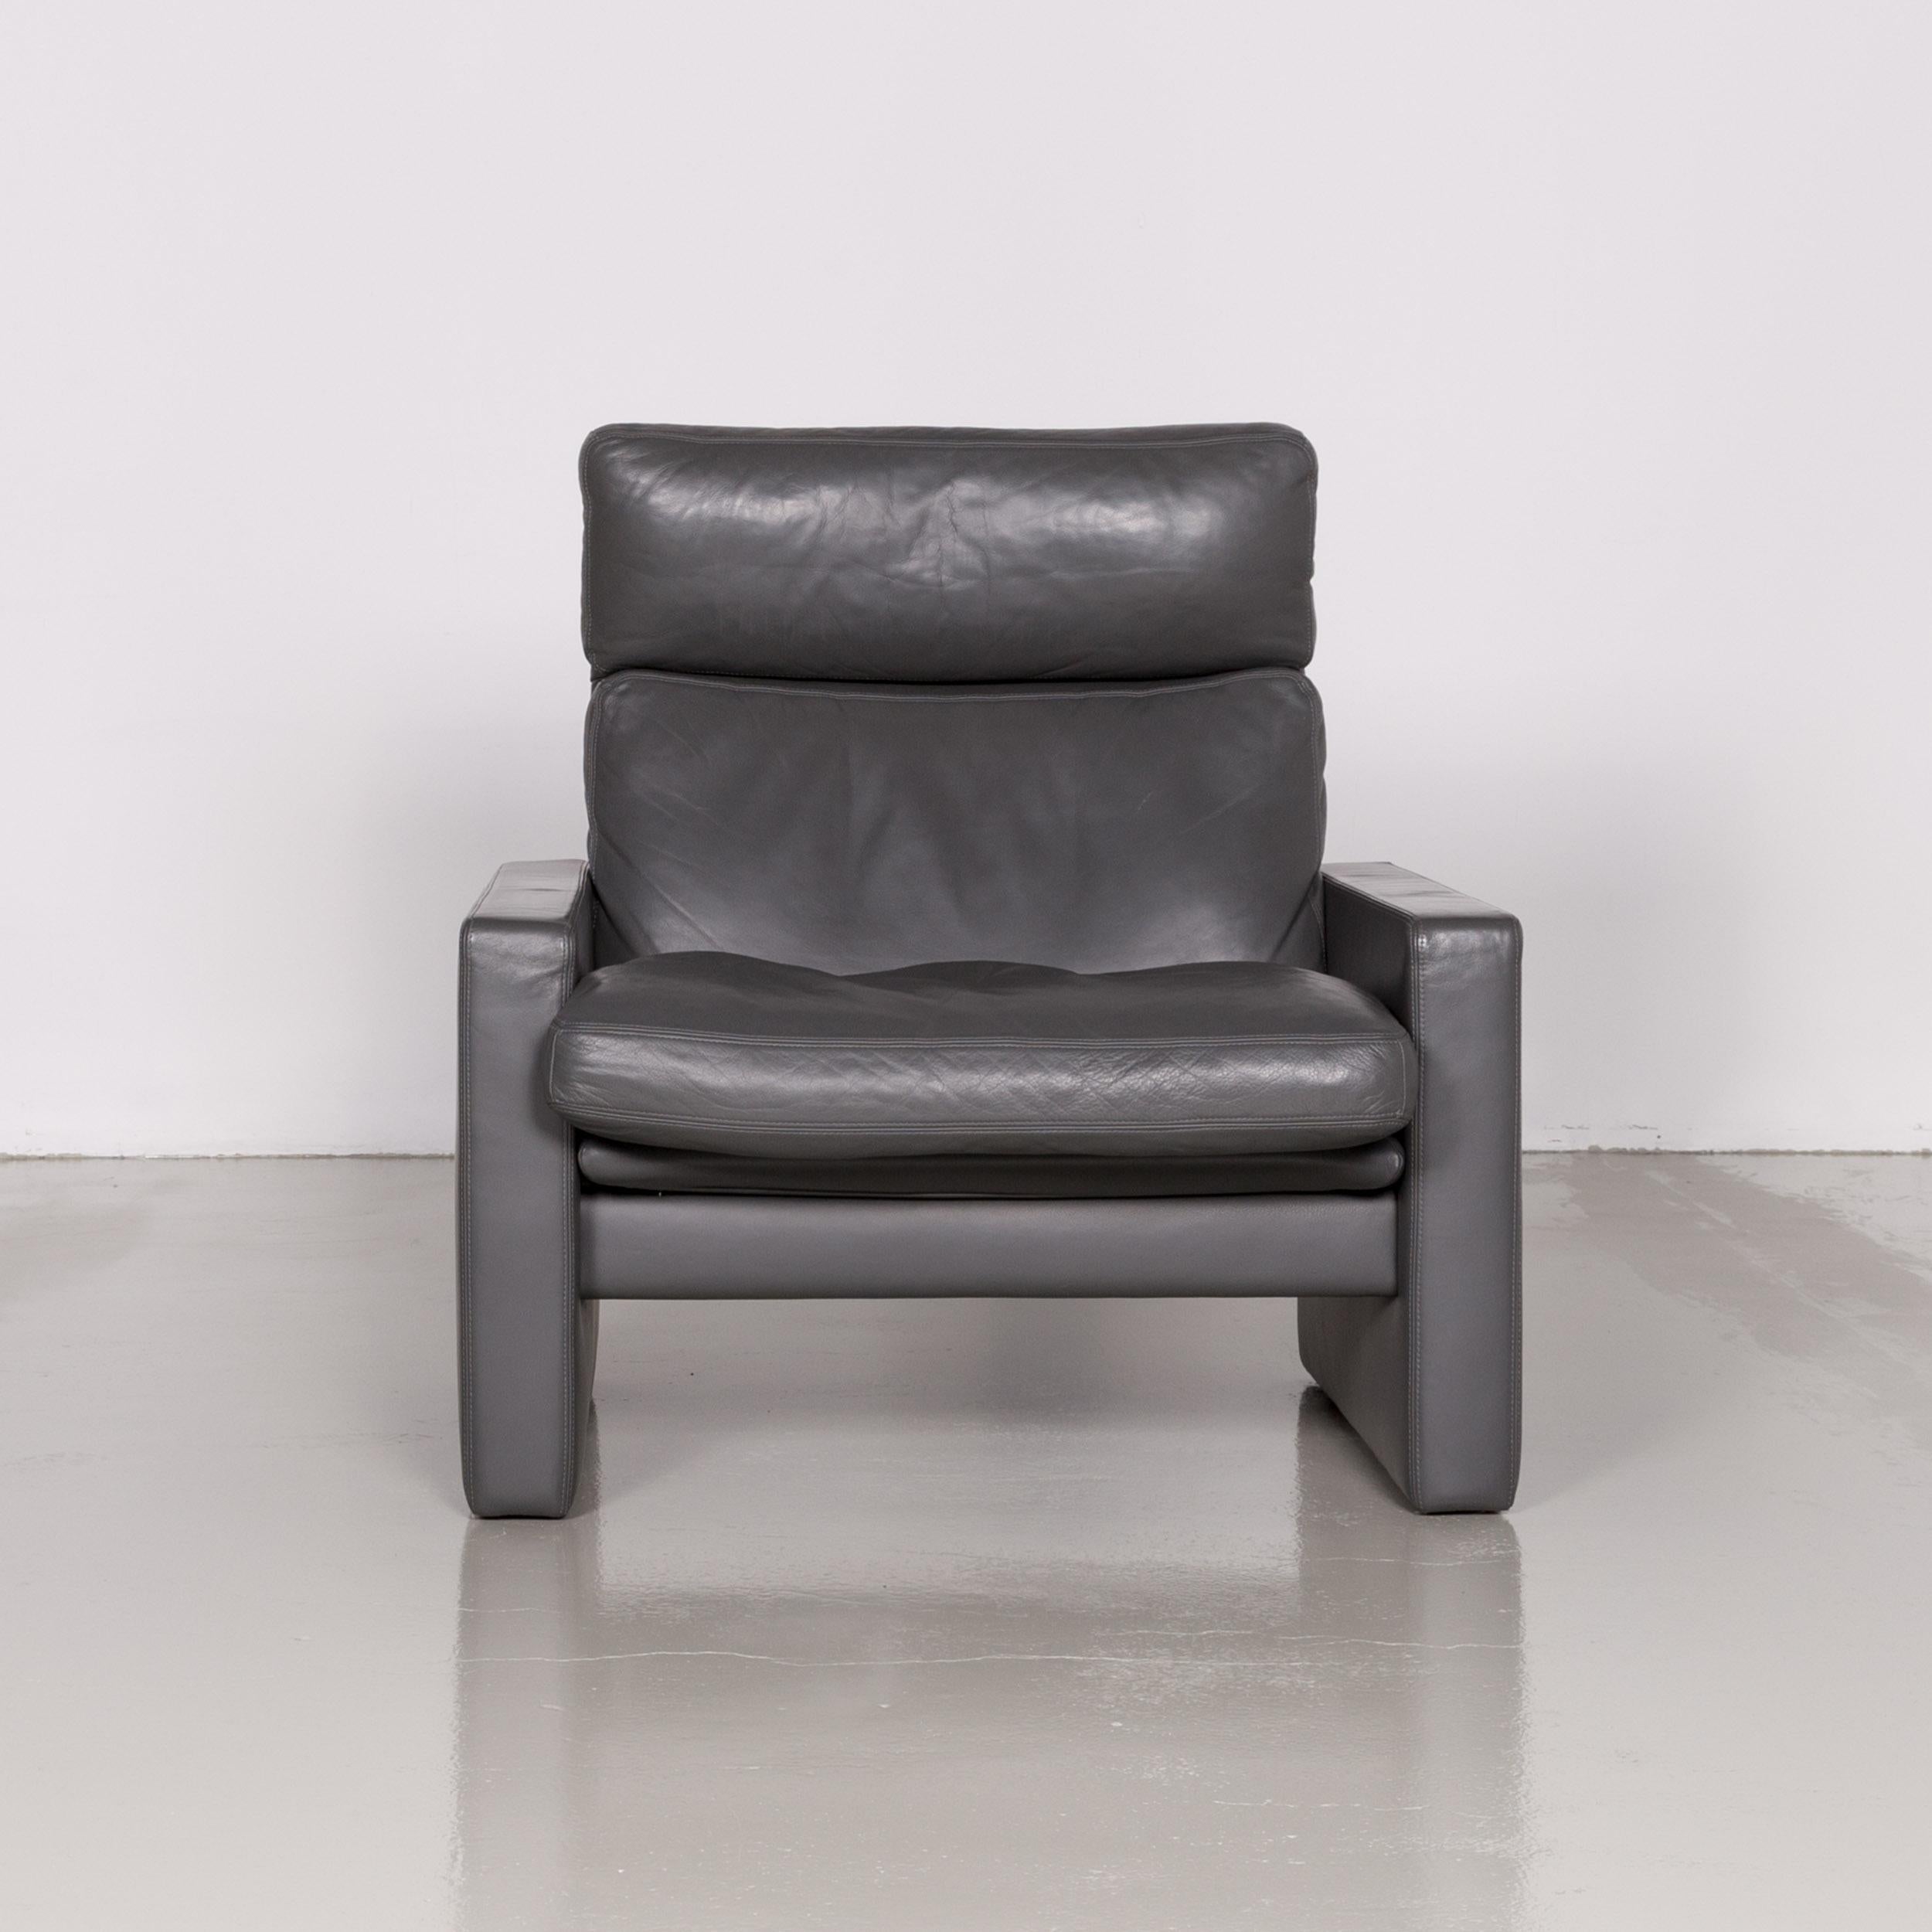 Erpo Manhattan designer armchair leather grey anthracite one seat function.